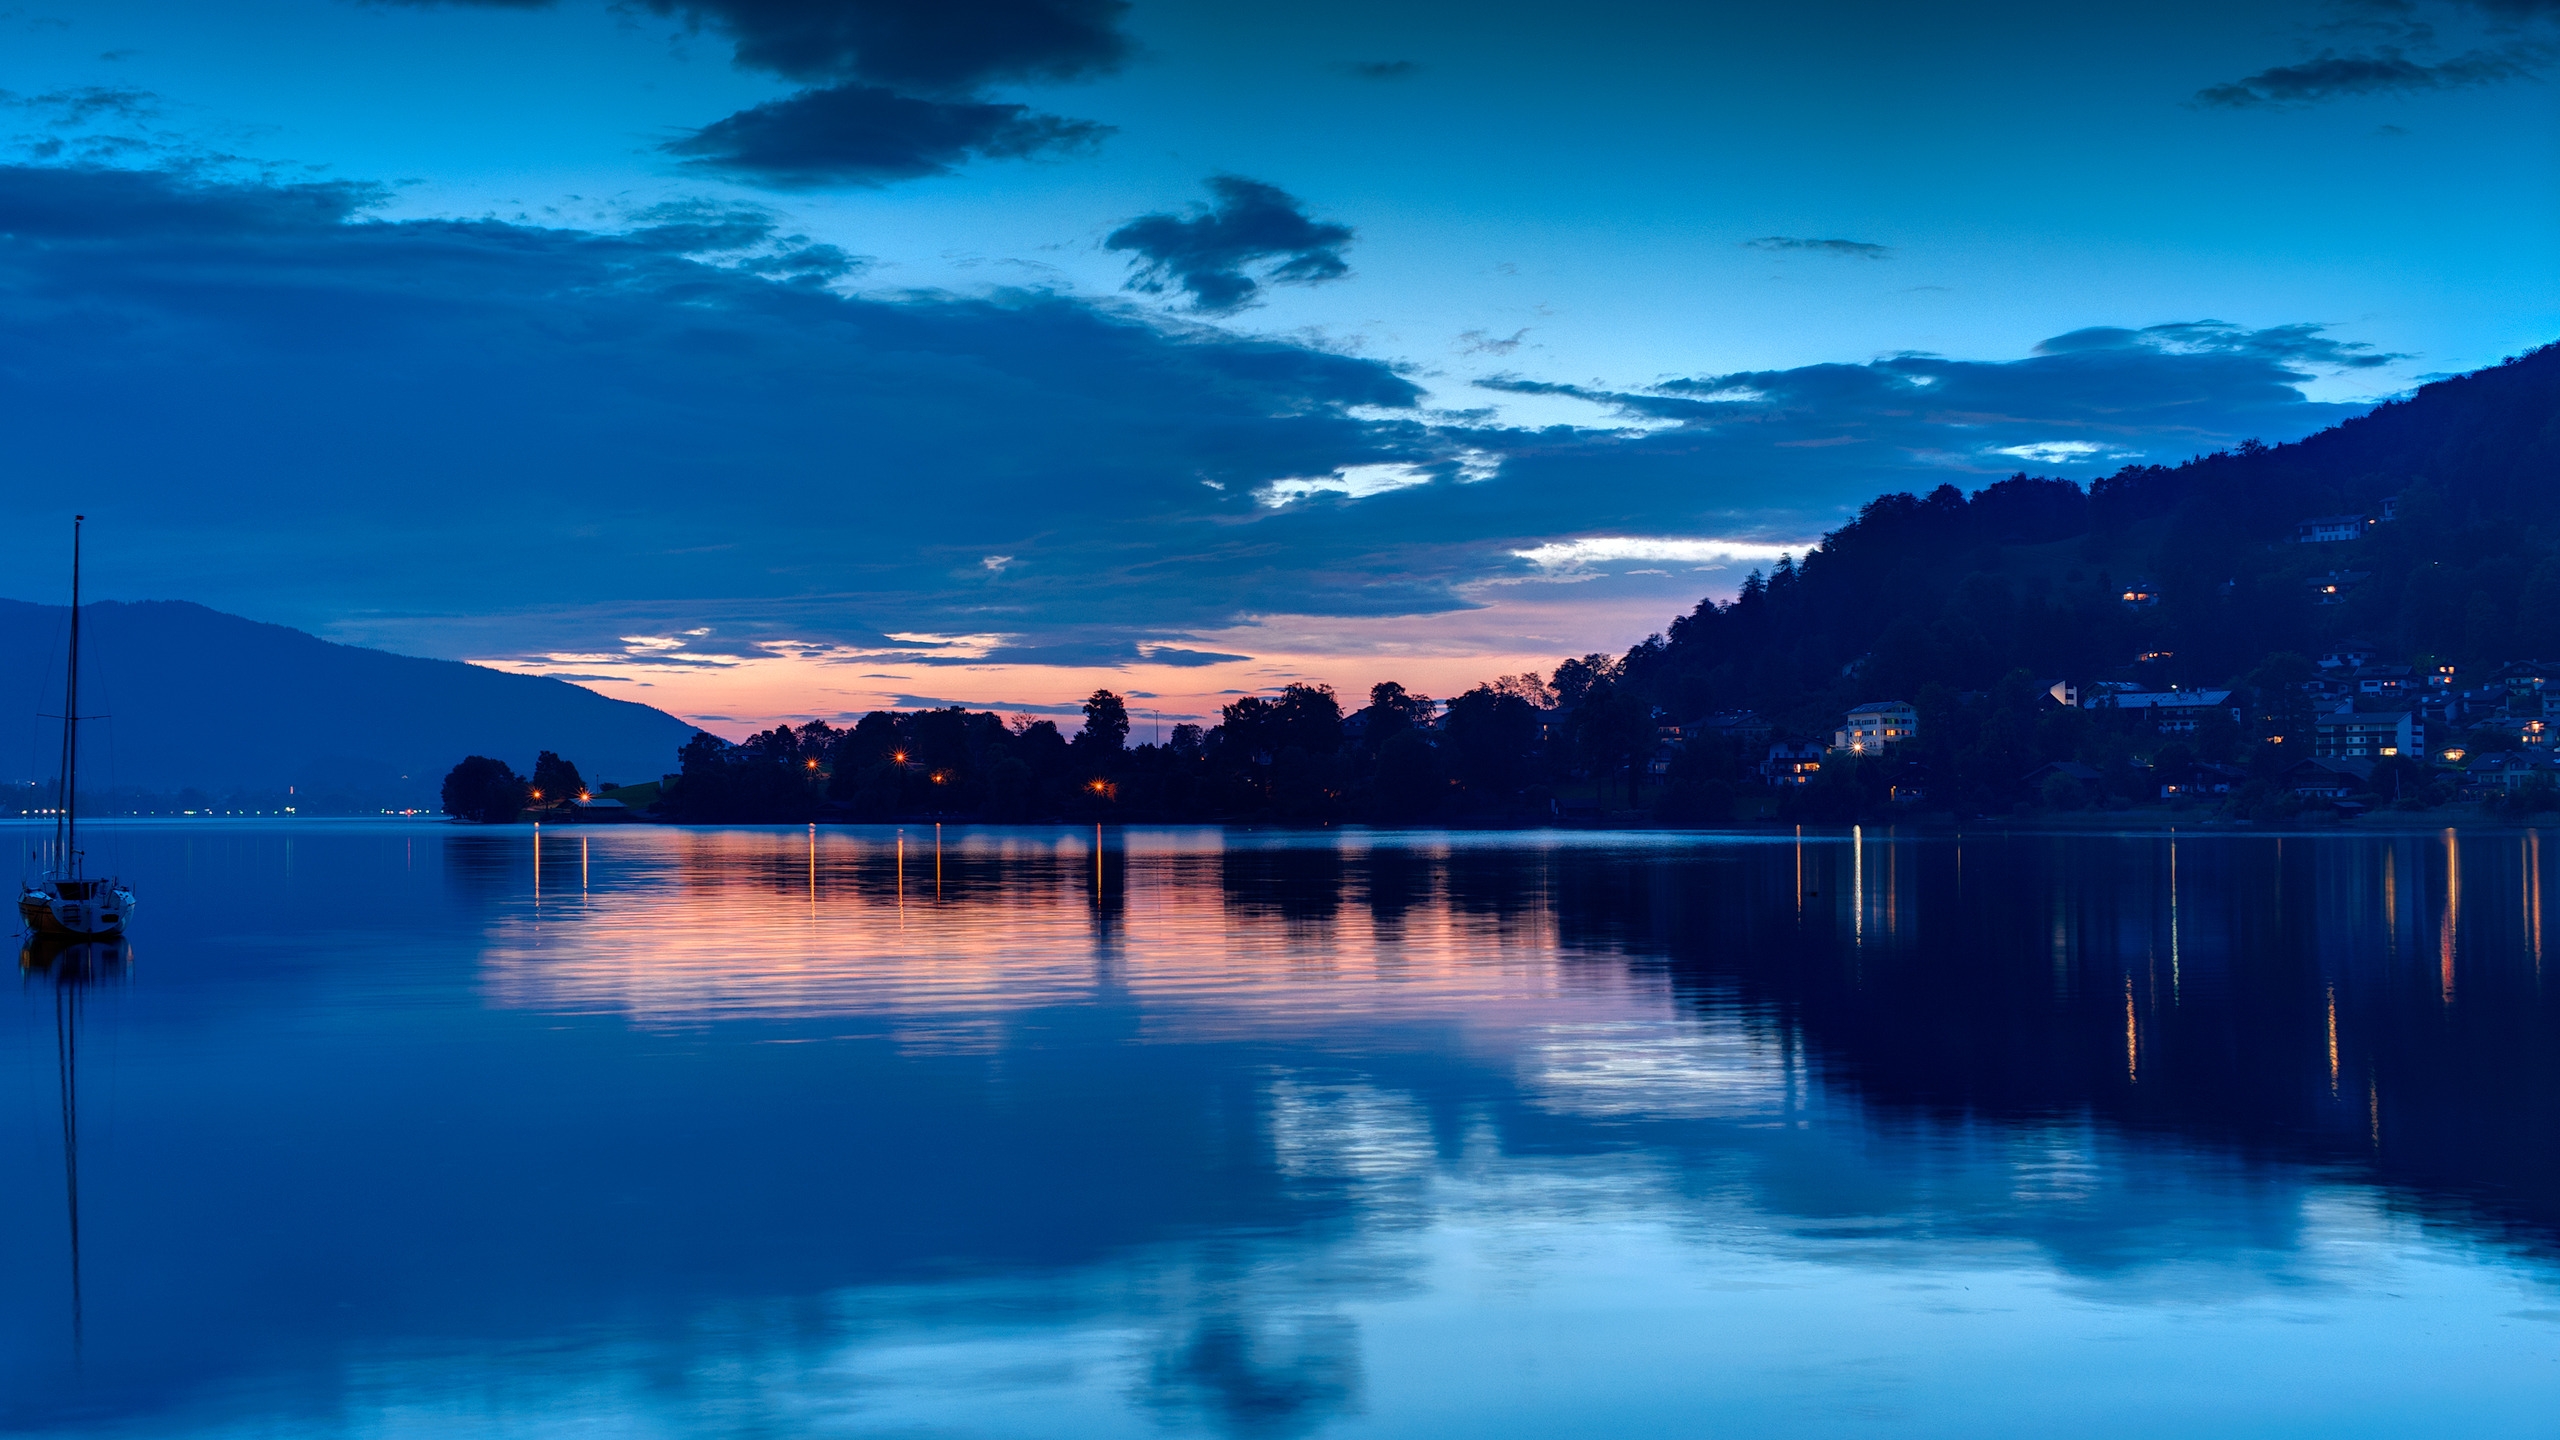 Tegernsee Lake for 2560x1440 HDTV resolution